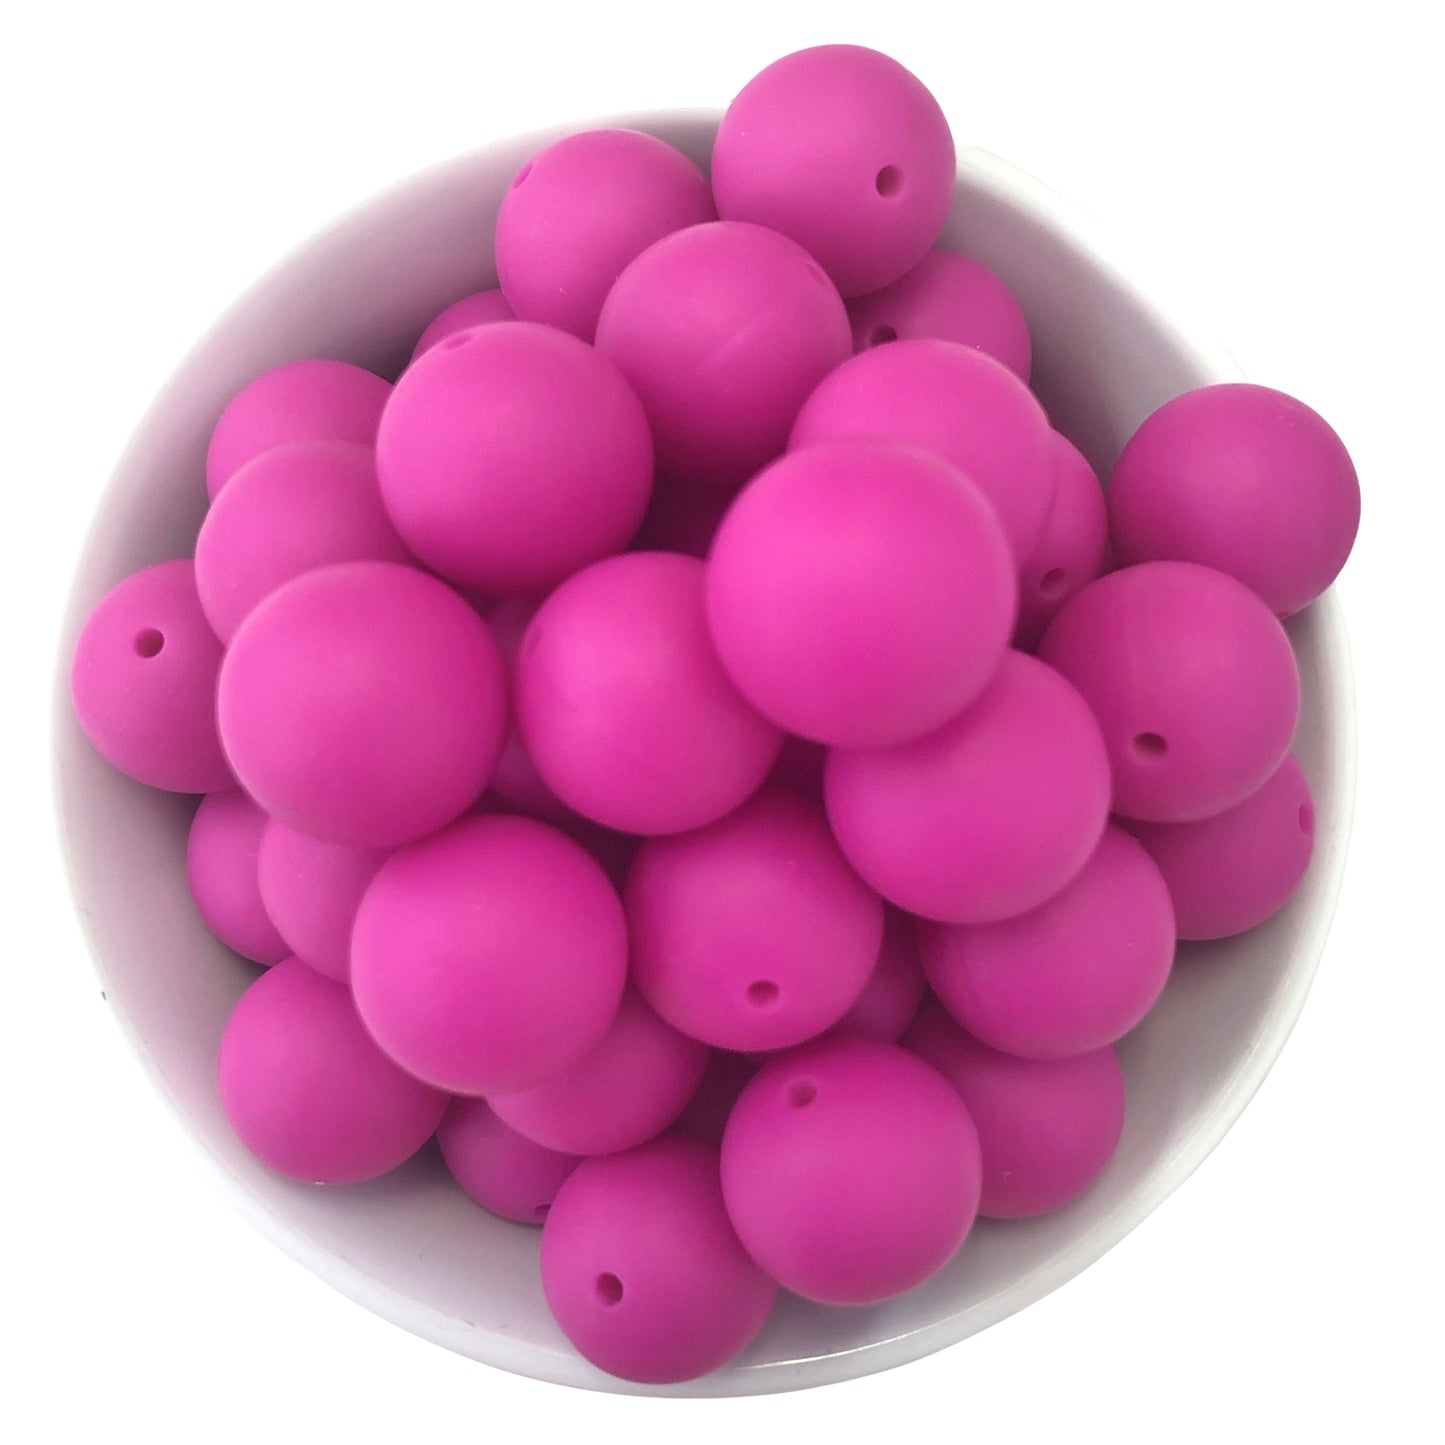 Dark Pink 19mm Silicone Beads - 5 pk.